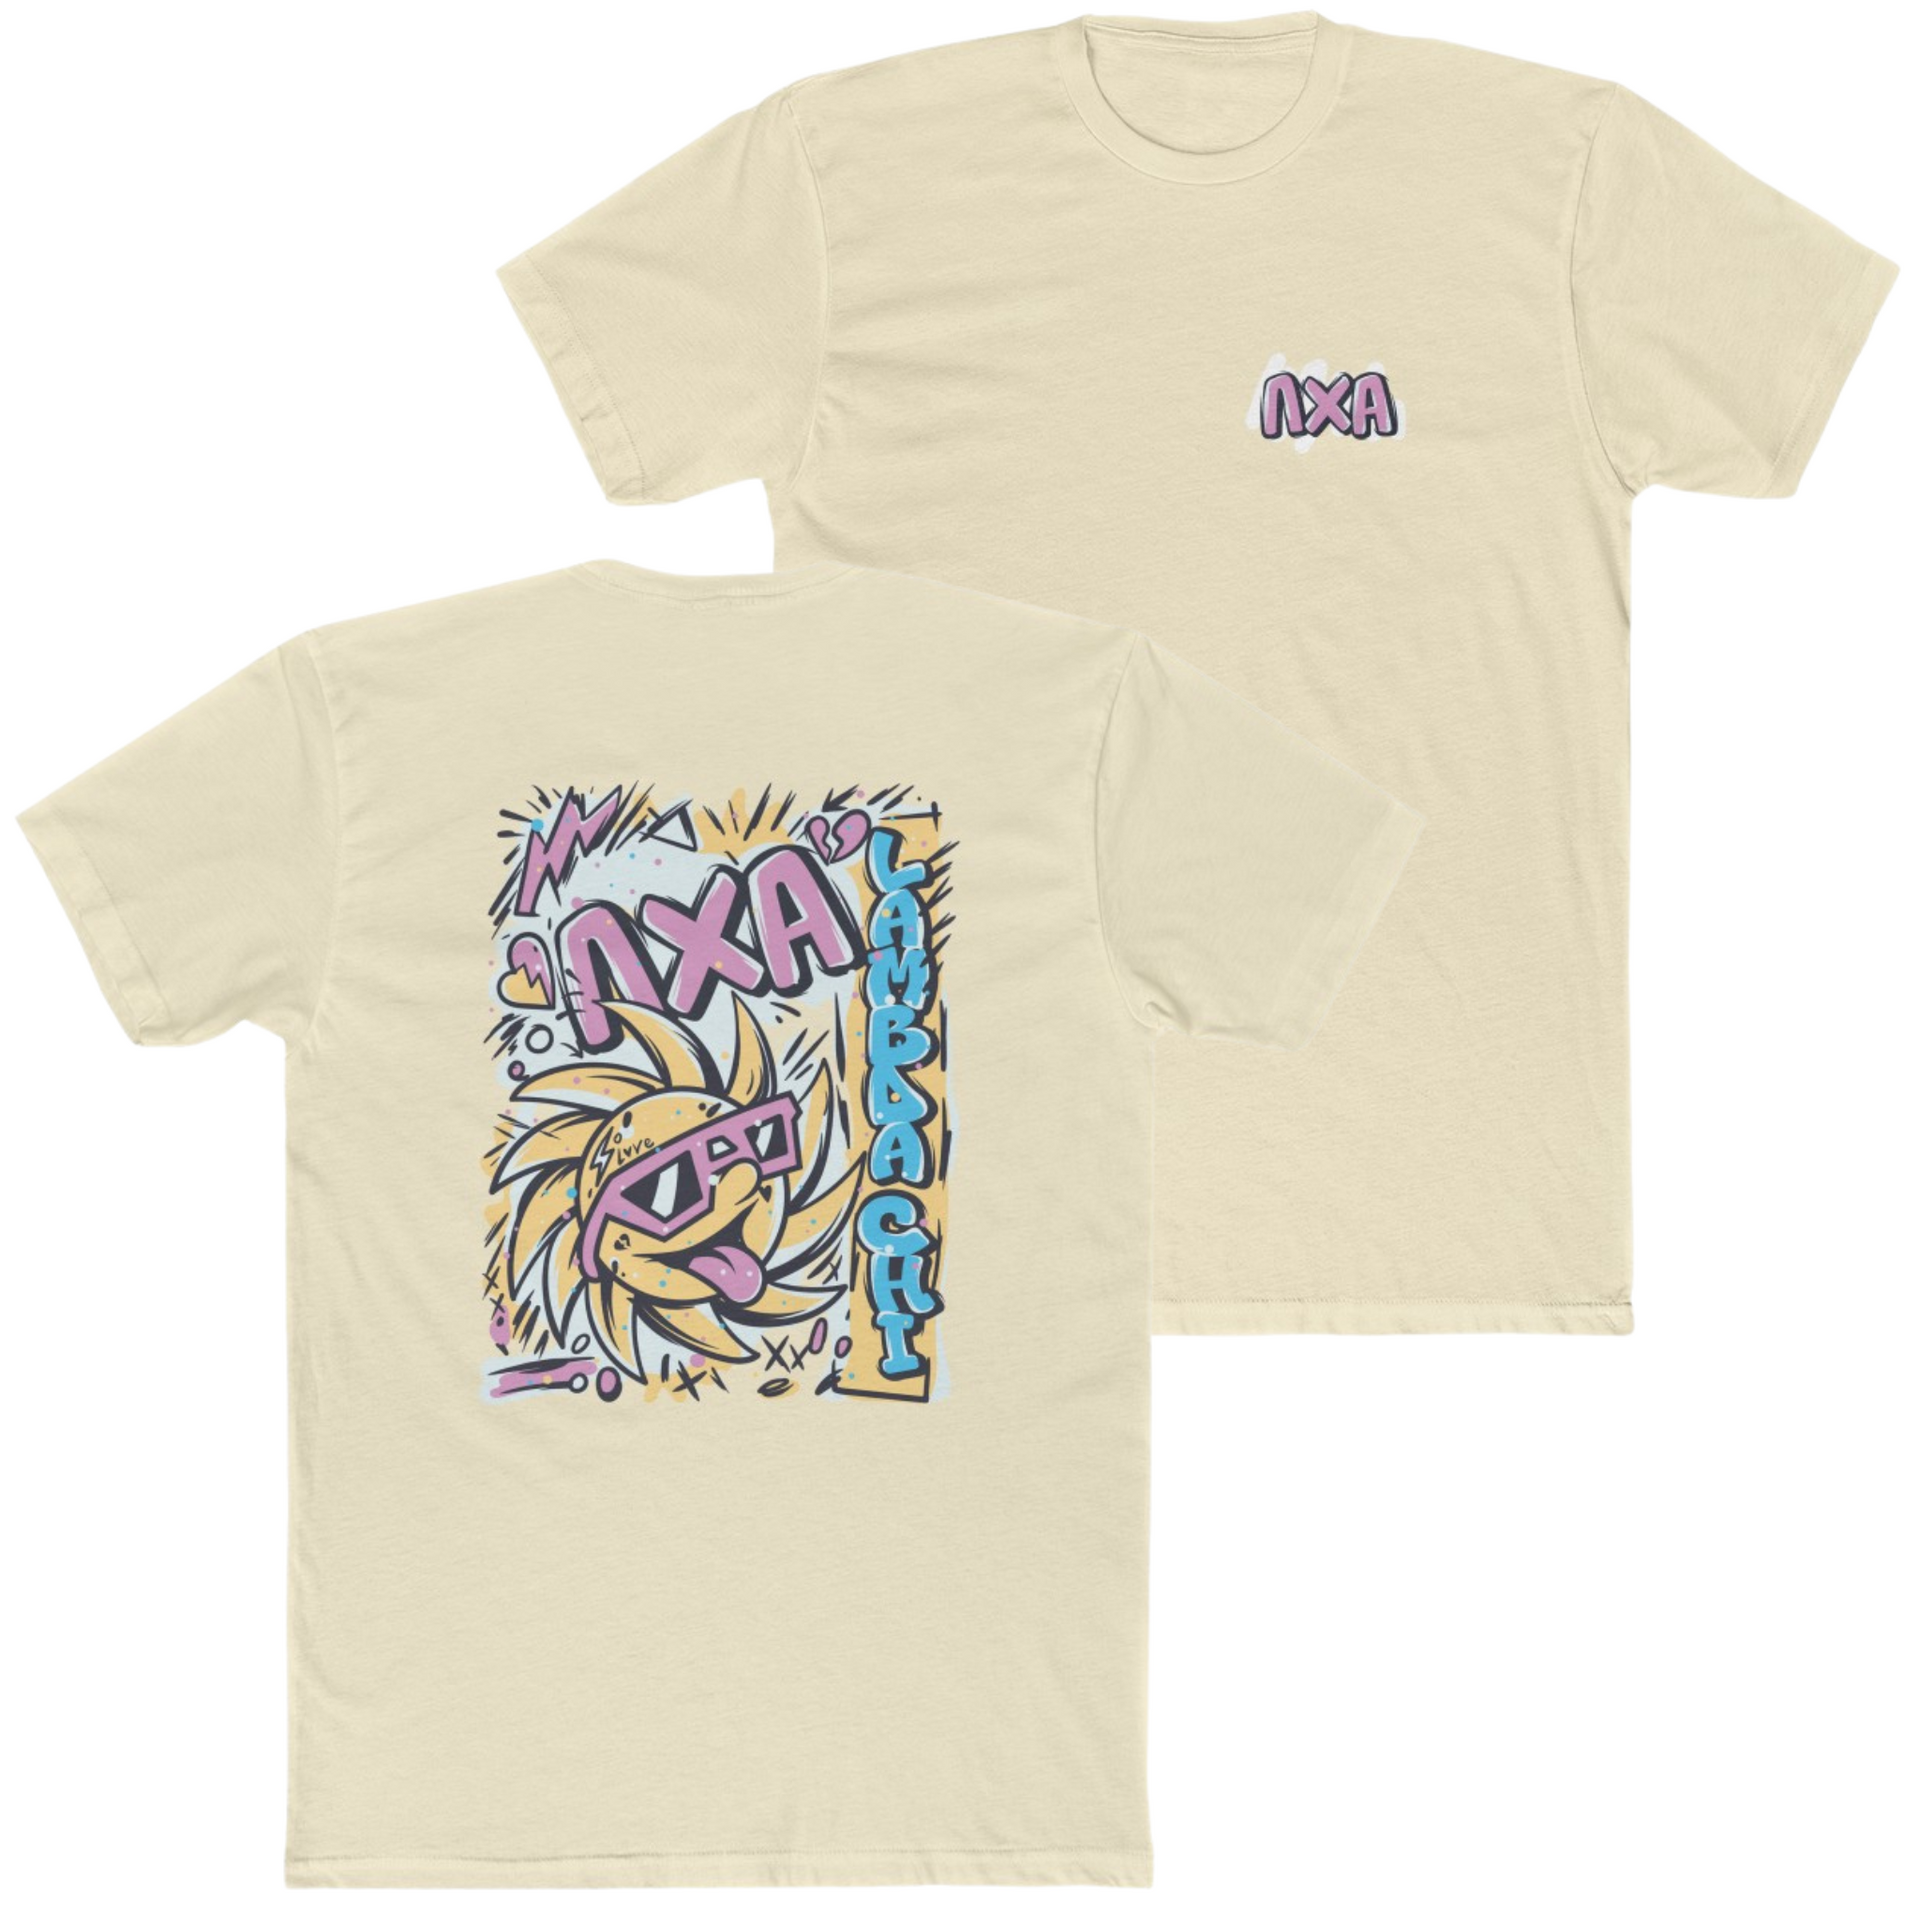 Sand Lambda Chi Alpha Graphic T-Shirt | Fun in the Sun | Lambda Chi Alpha Fraternity Apparel 